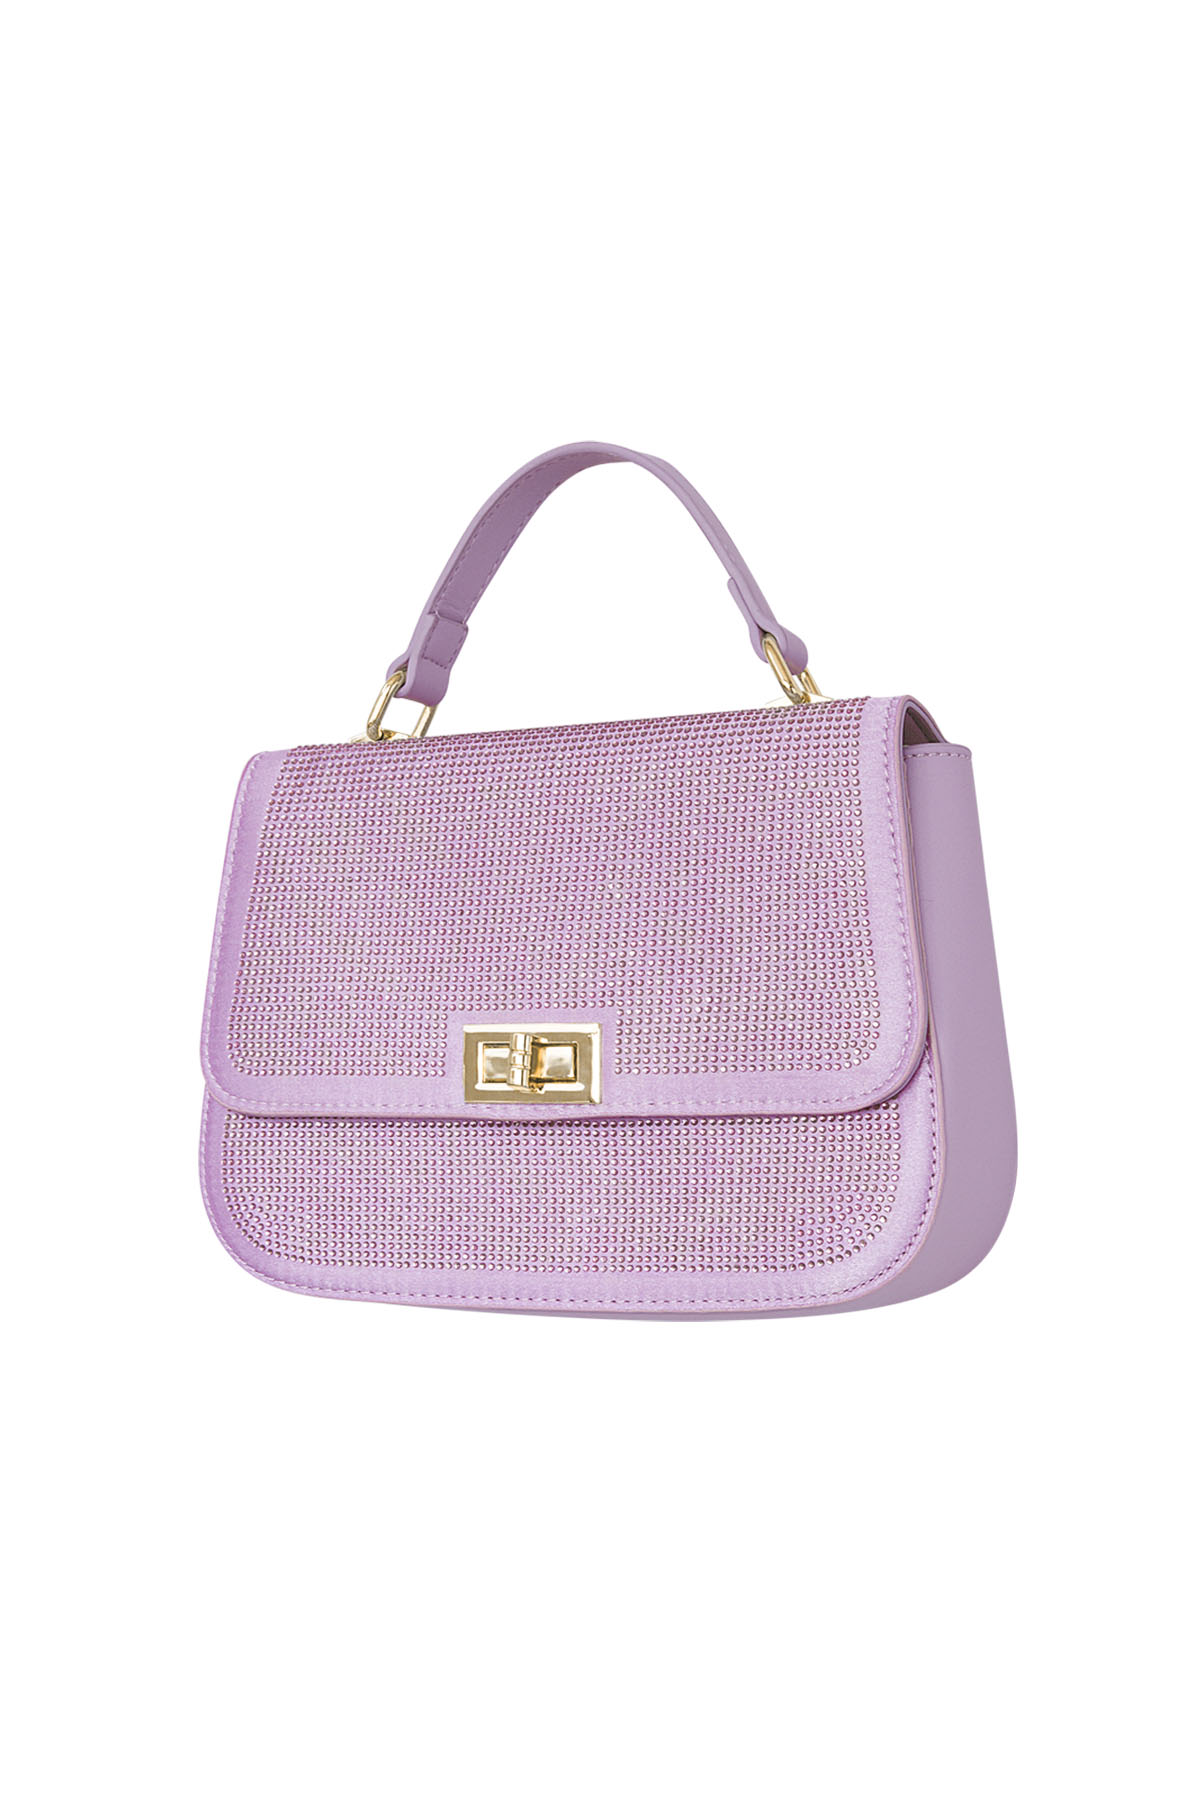 Handbag glamor - purple PU 